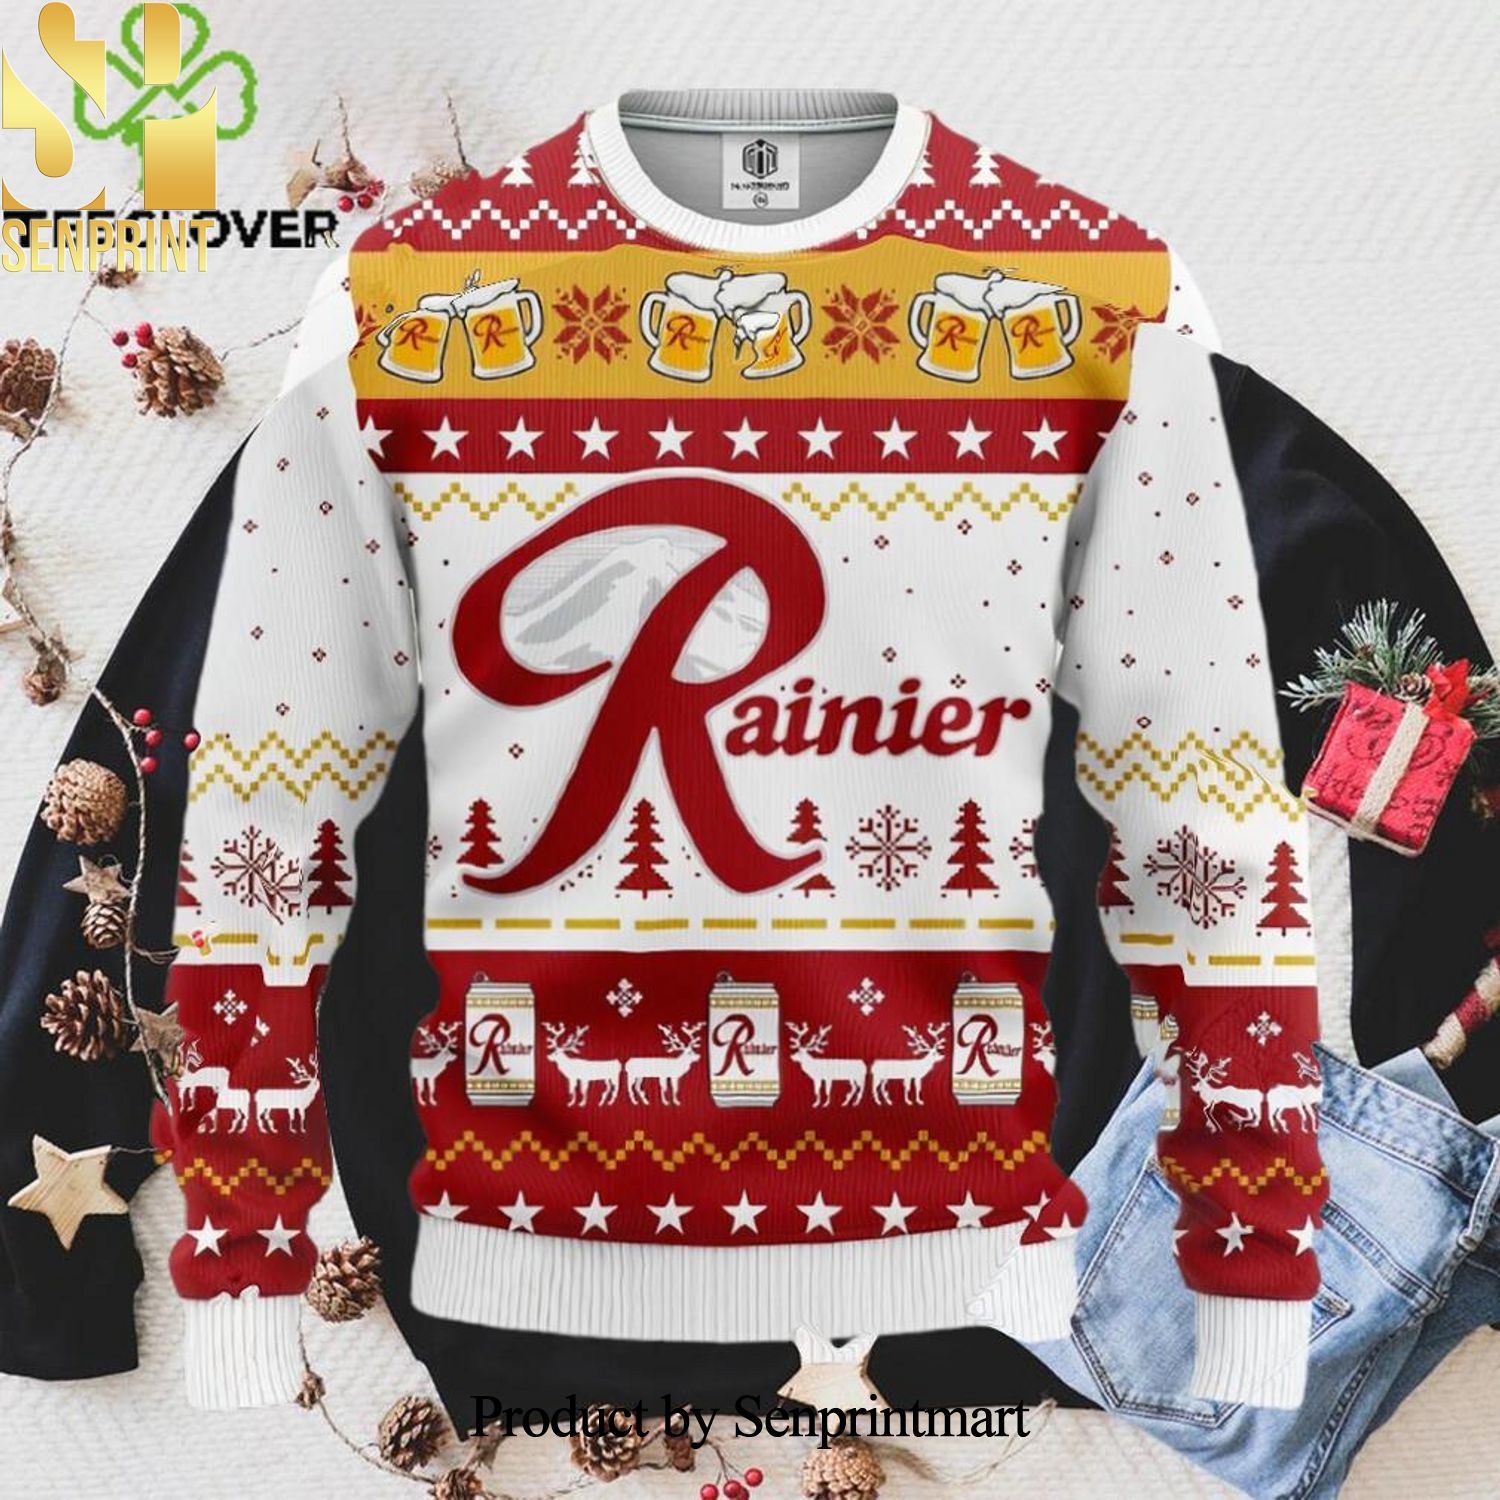 Rainier Beer Xmas Christmas Ugly Wool Knitted Sweater